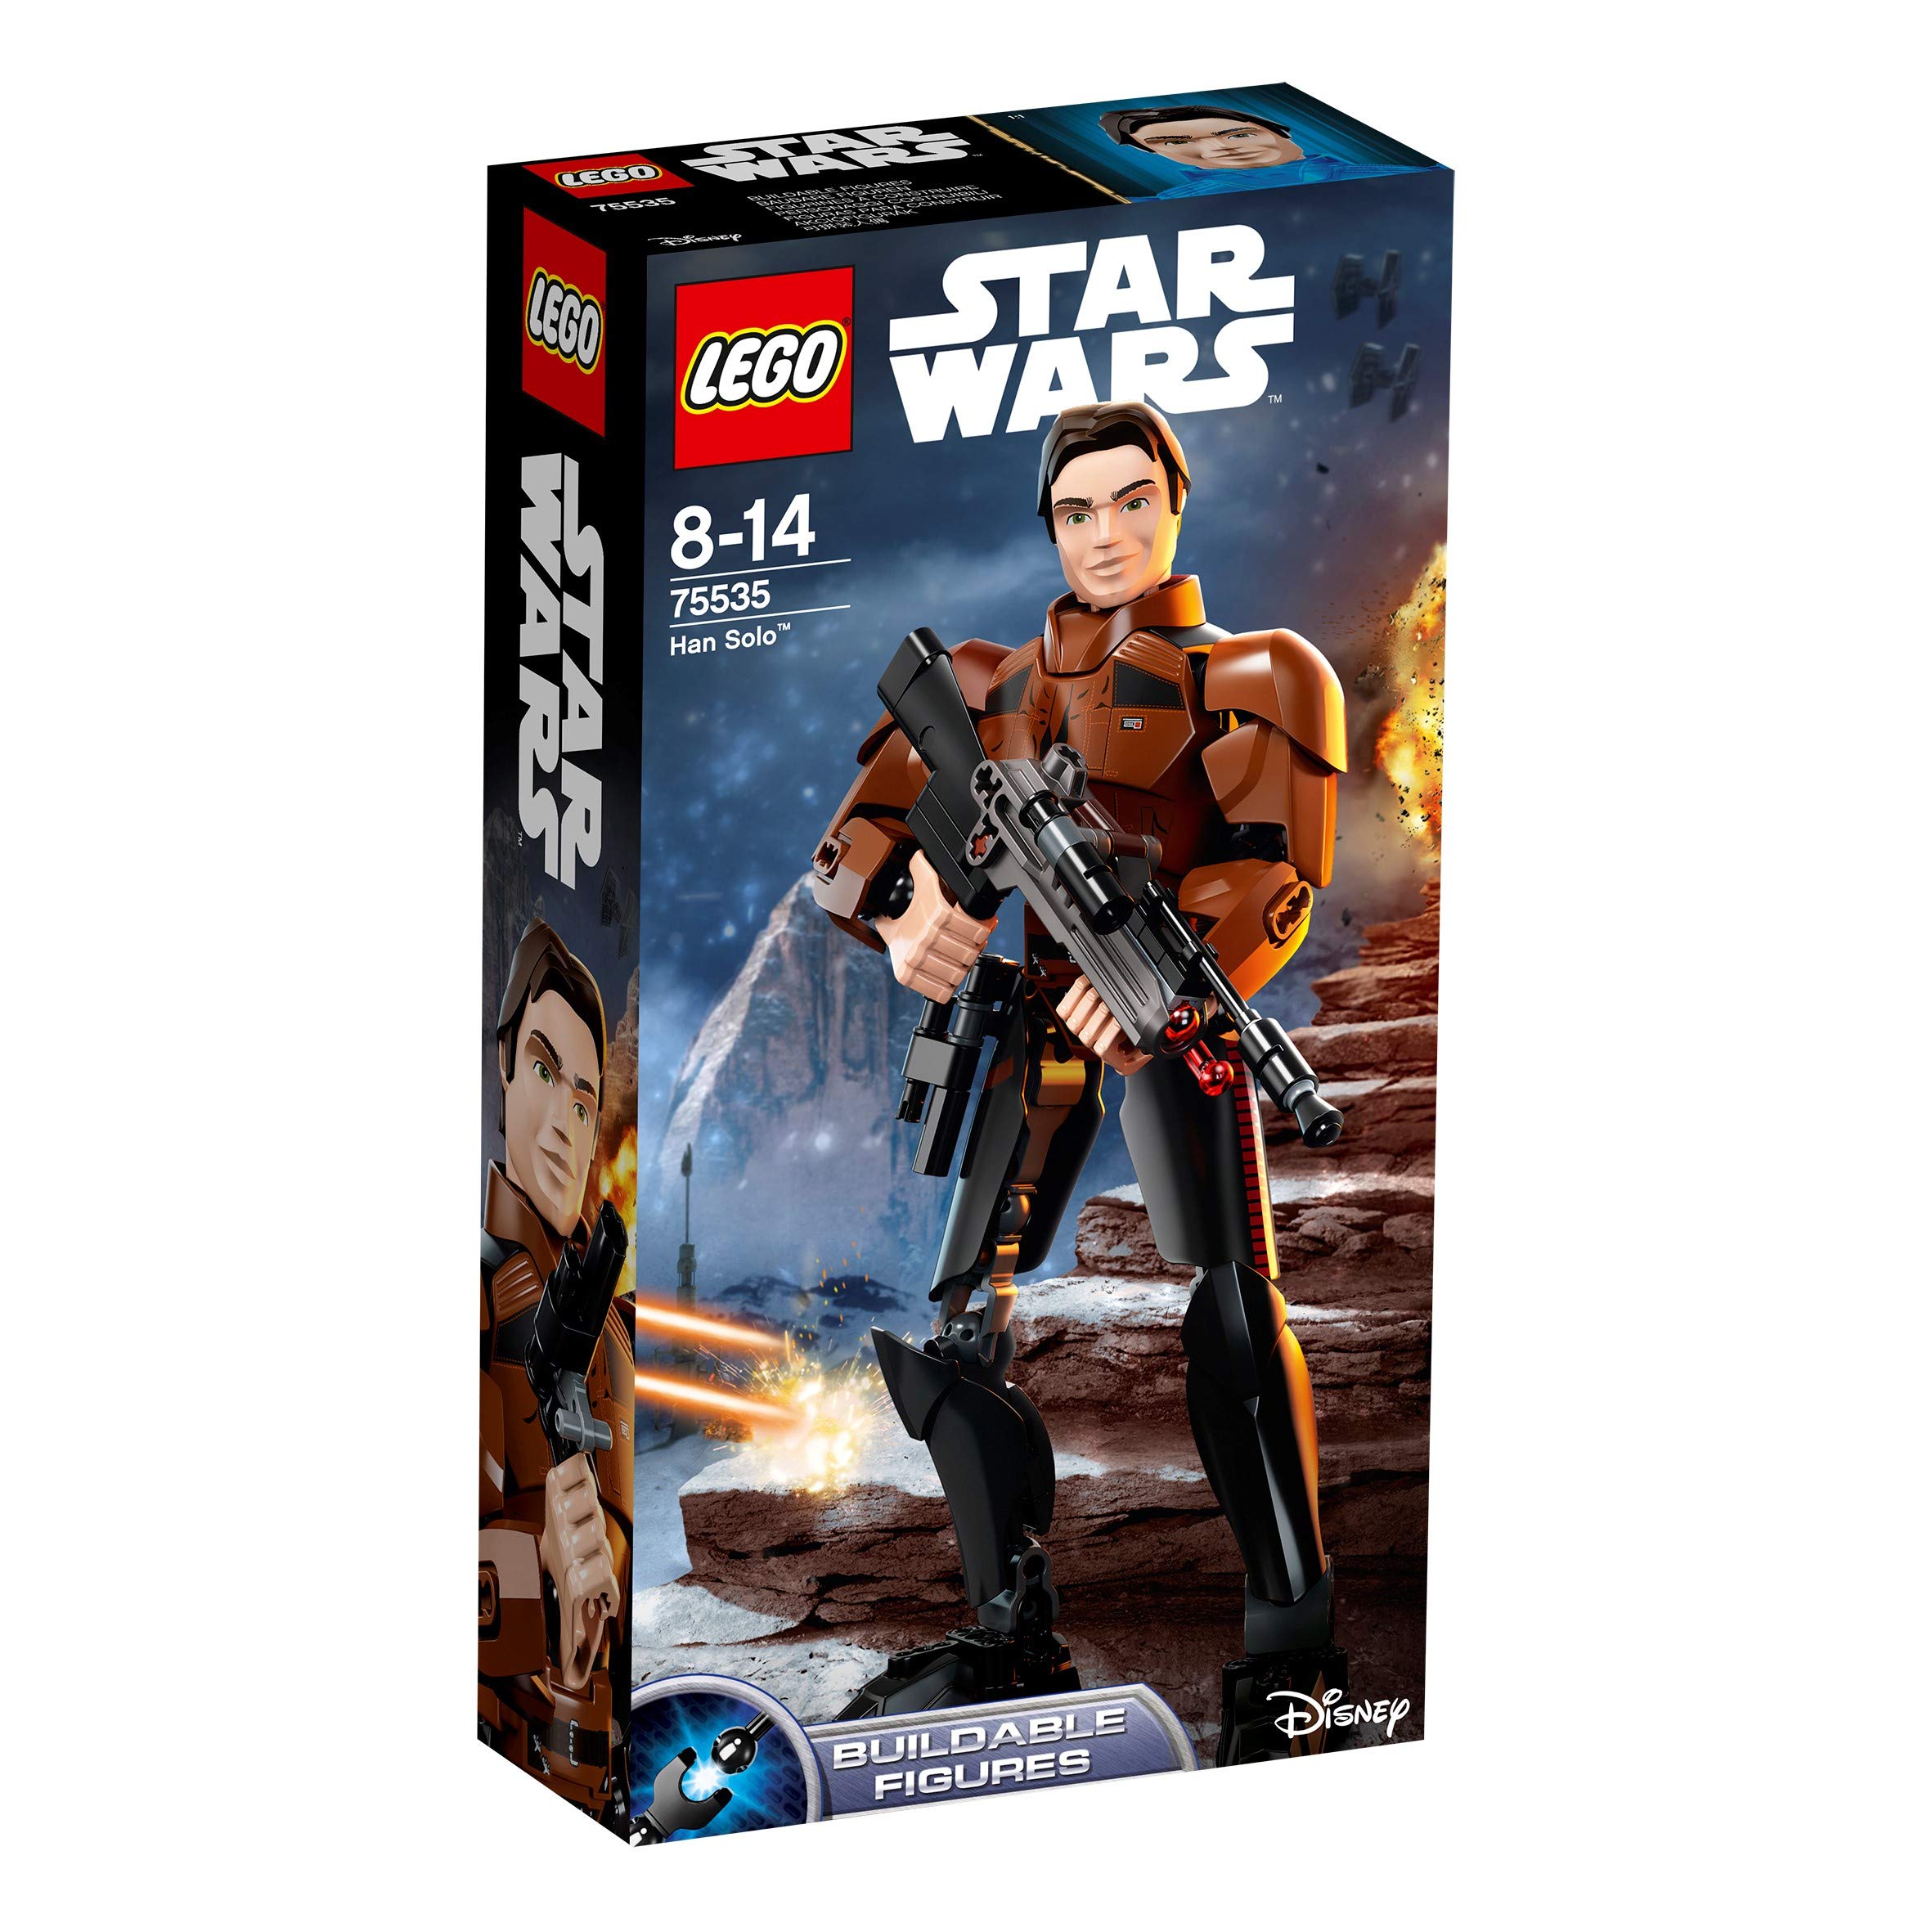 LEGO UK - 75535 Star Wars Han Solo Buildable Figure